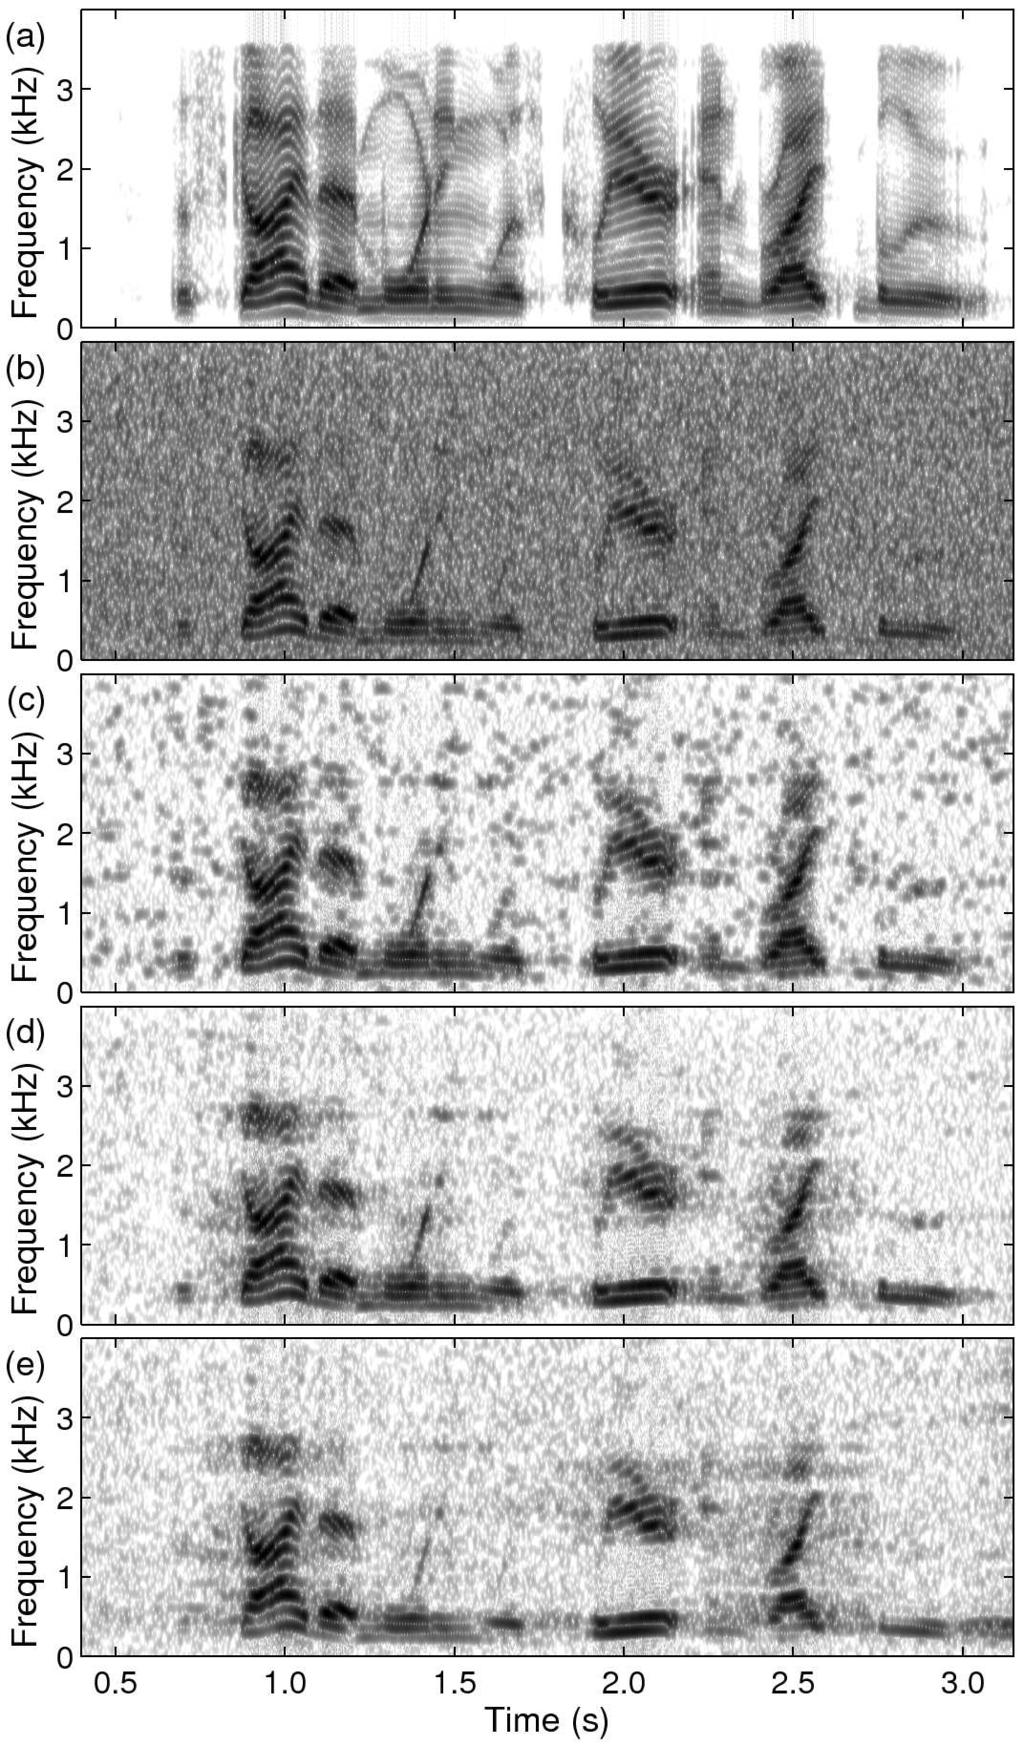 Fig. 11: Spectrograms of sp10 utterance, The sky that morning speech corpus: (a) clean speech (PESQ: 4.50); (b) speech degraded by AWGN at 5 db SNR (PESQ: 1.